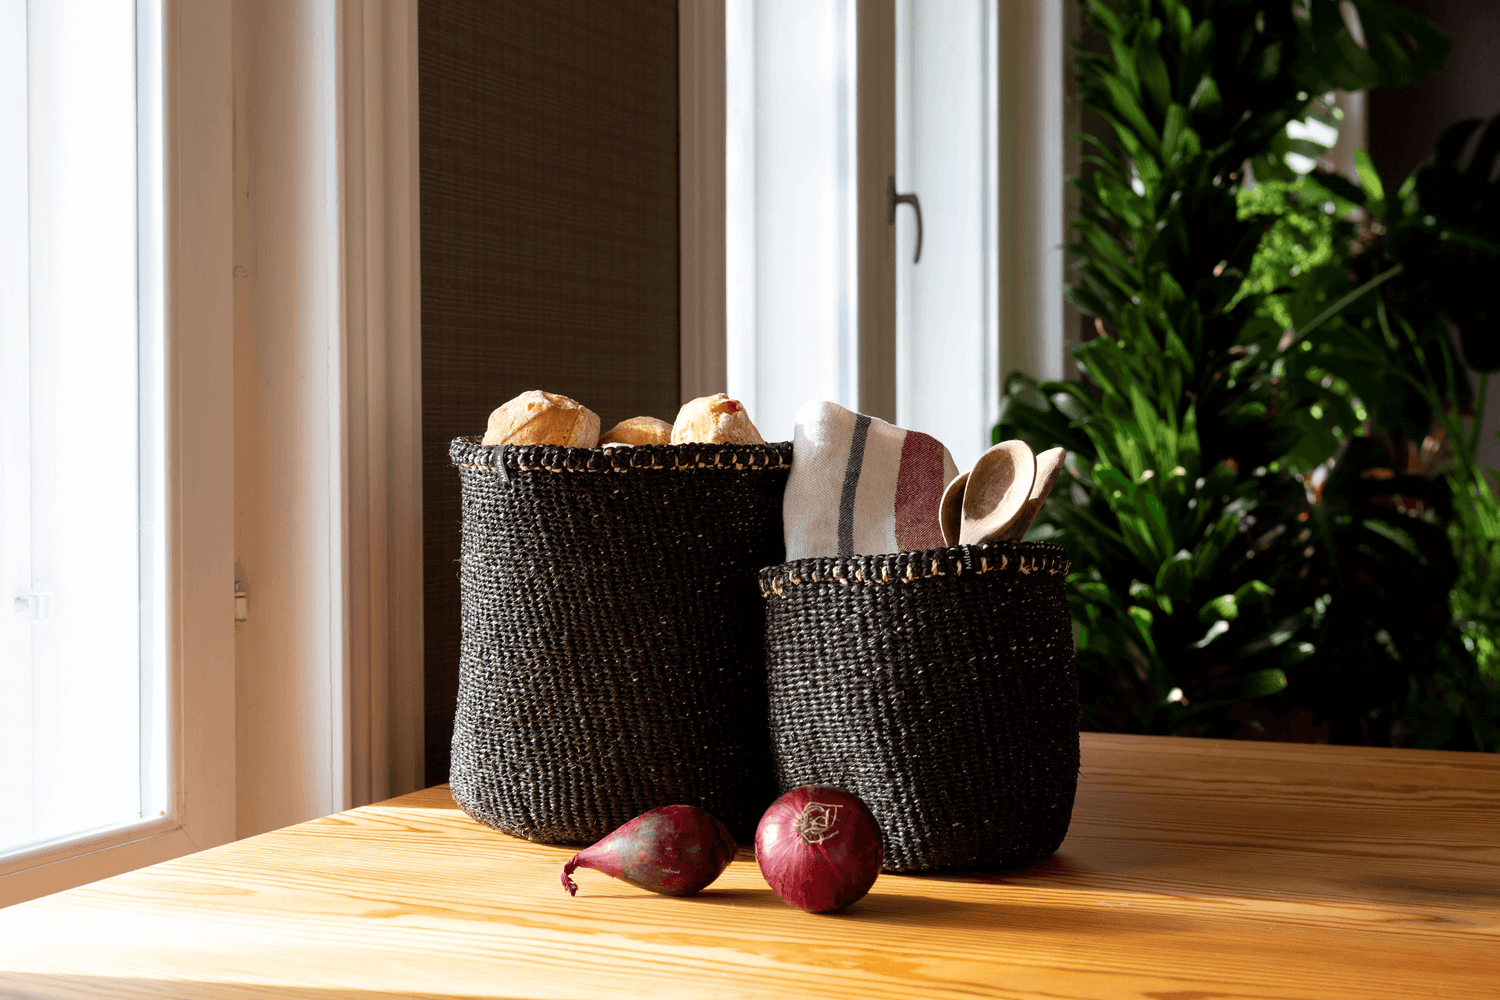 Mifuko’s baskets are versatile